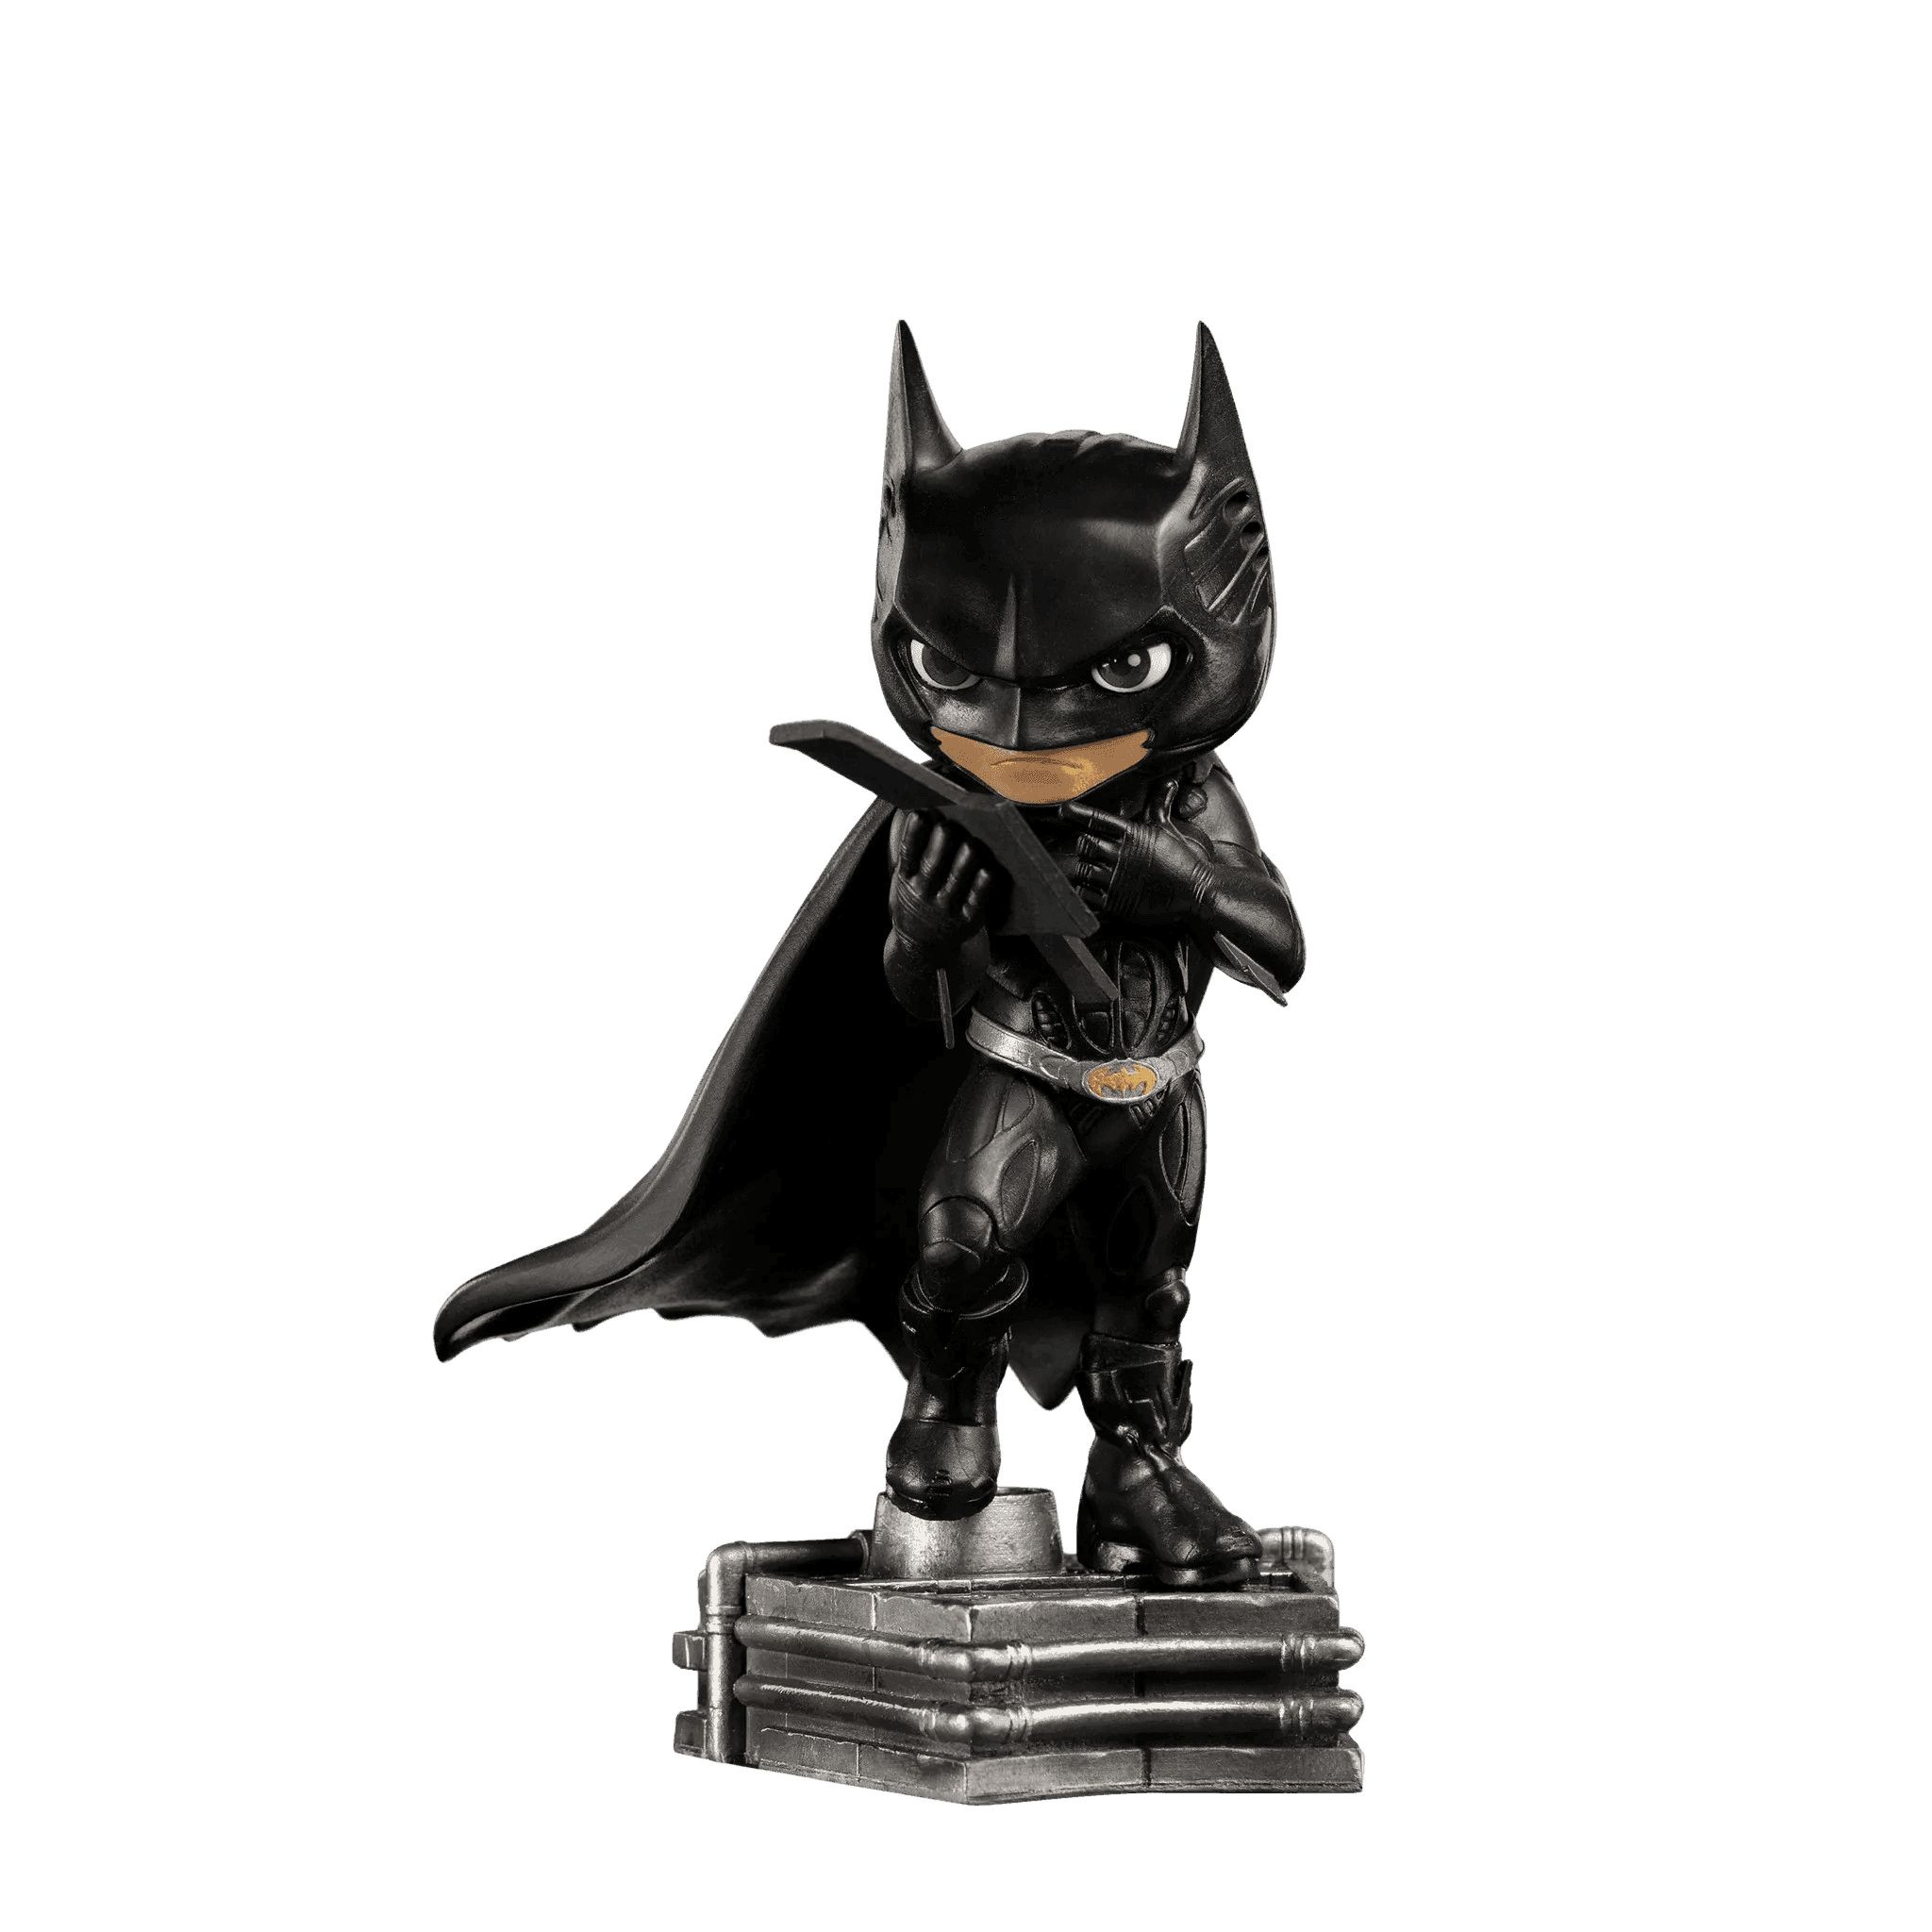 Iron Studios - Batman Forever - Batman MiniCo Figure - The Card Vault